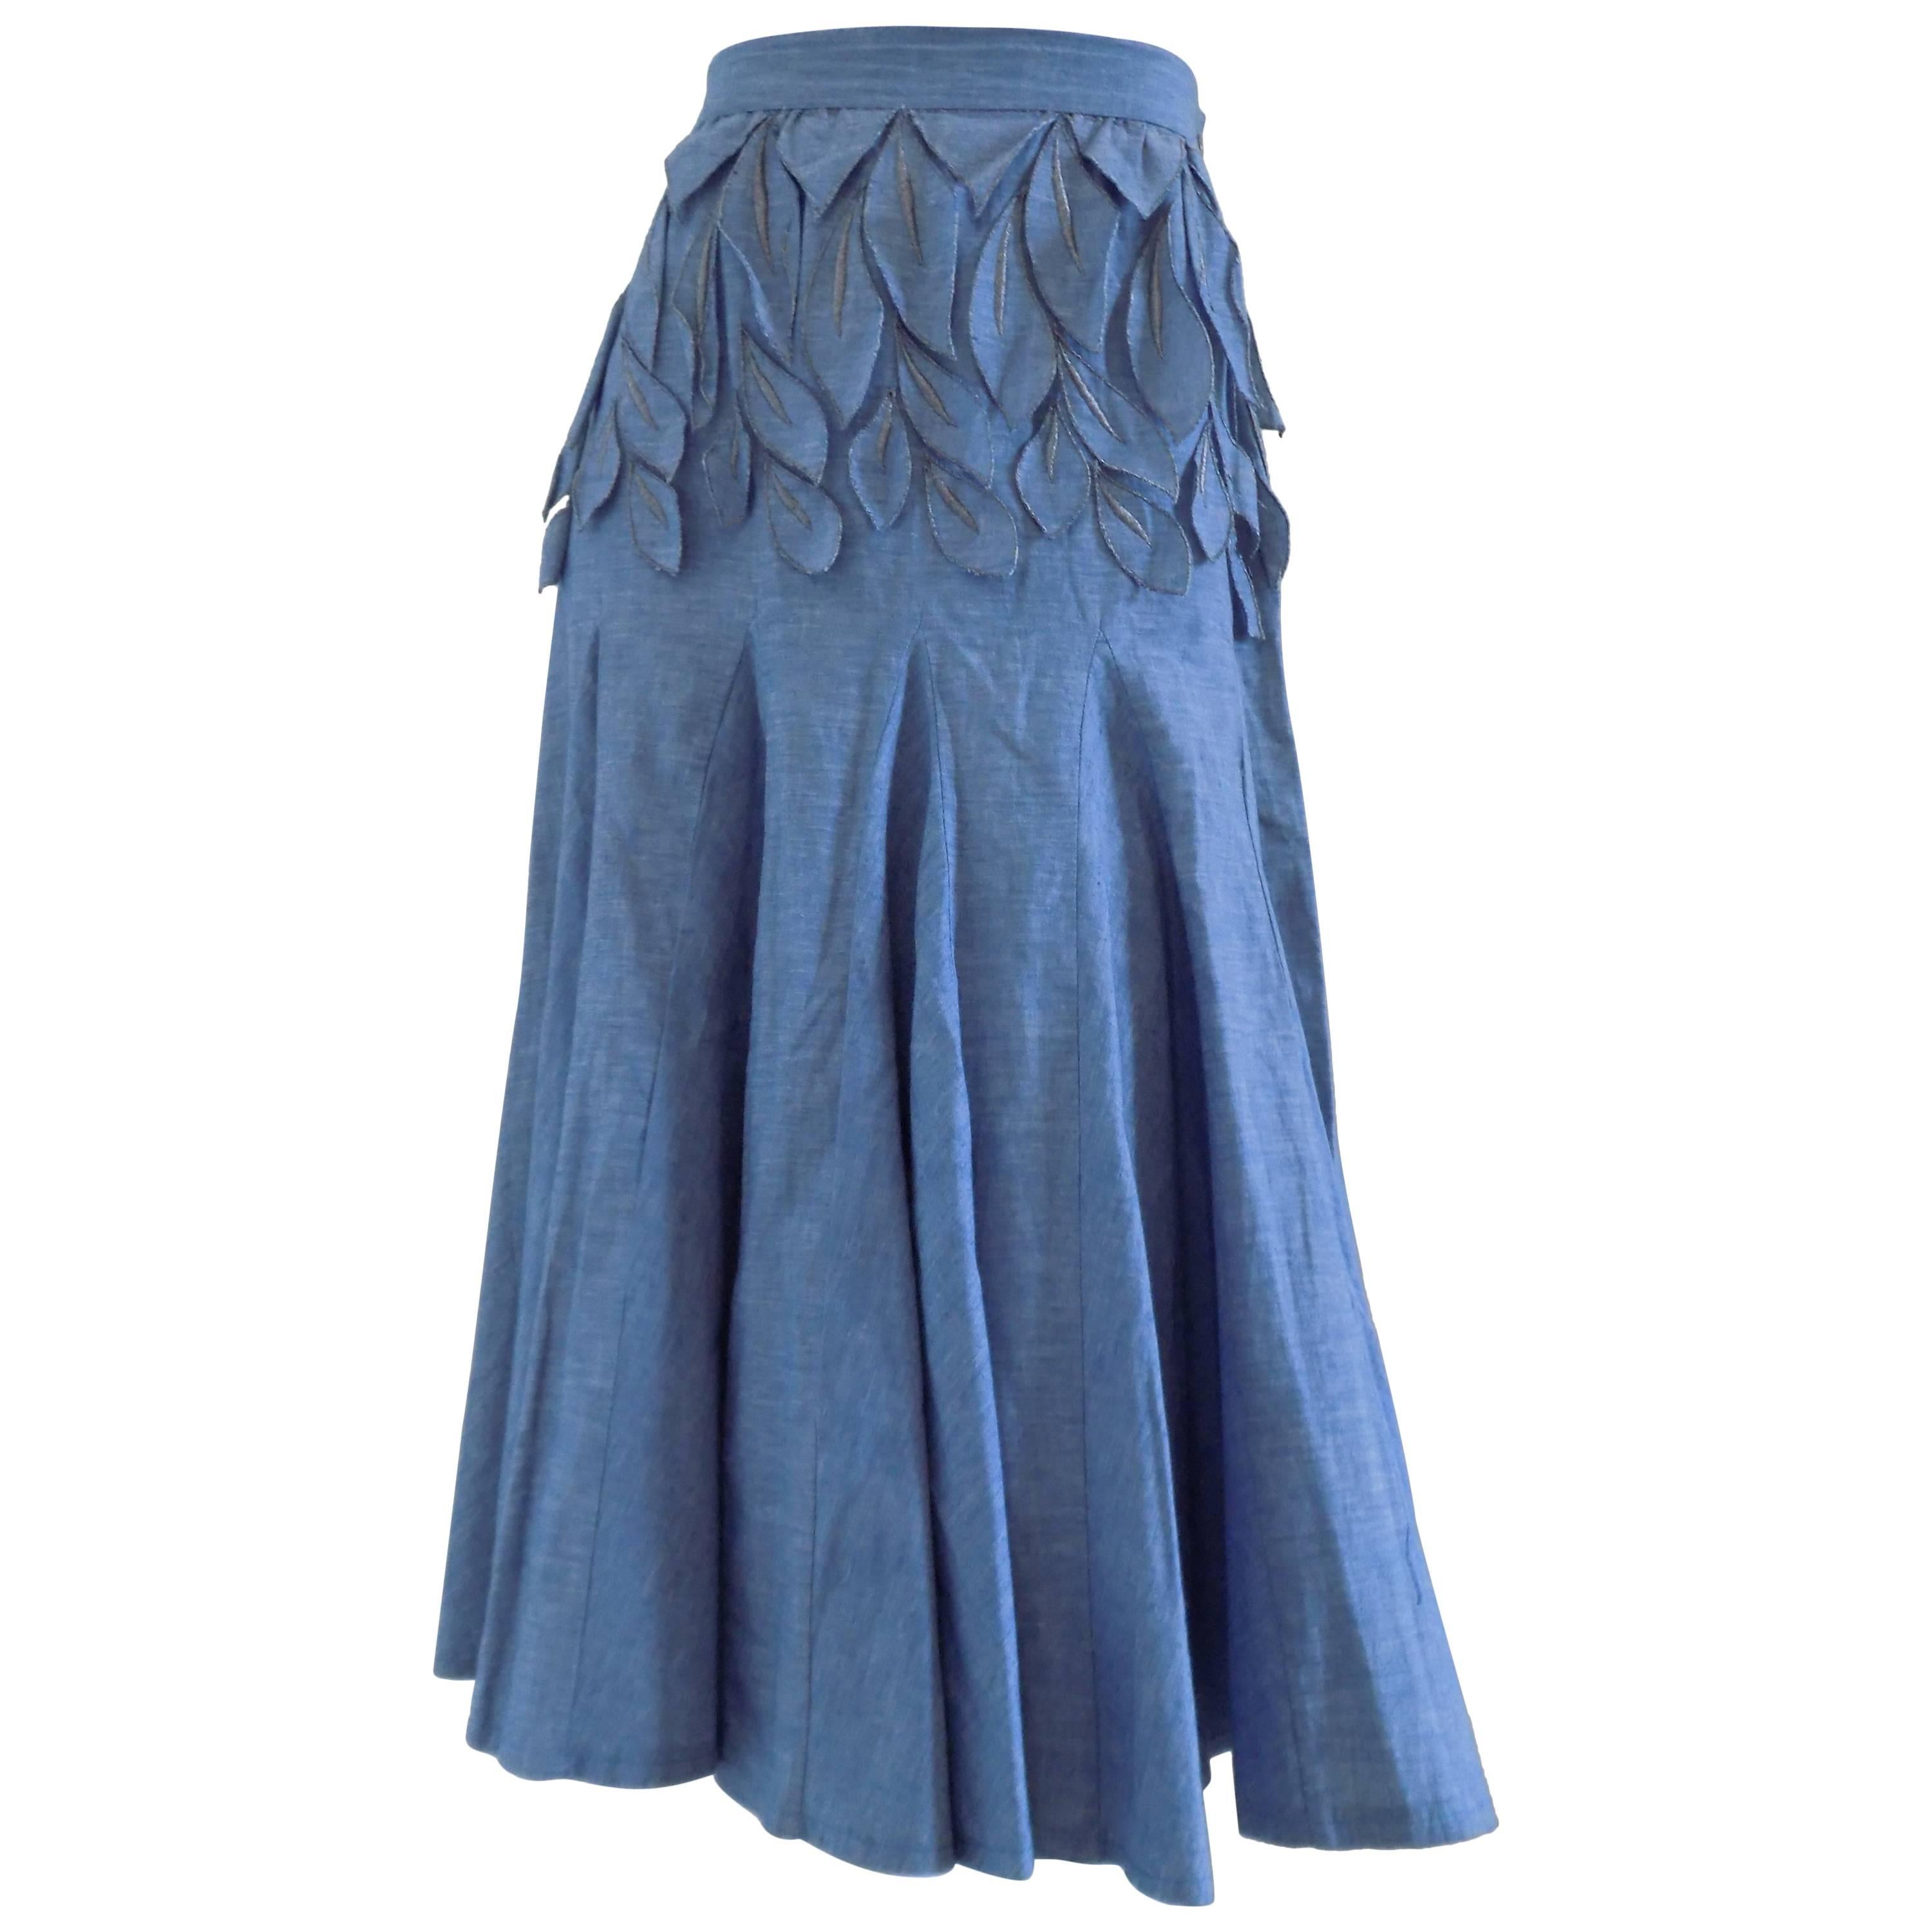 1980s Carlito Blu denim skirt